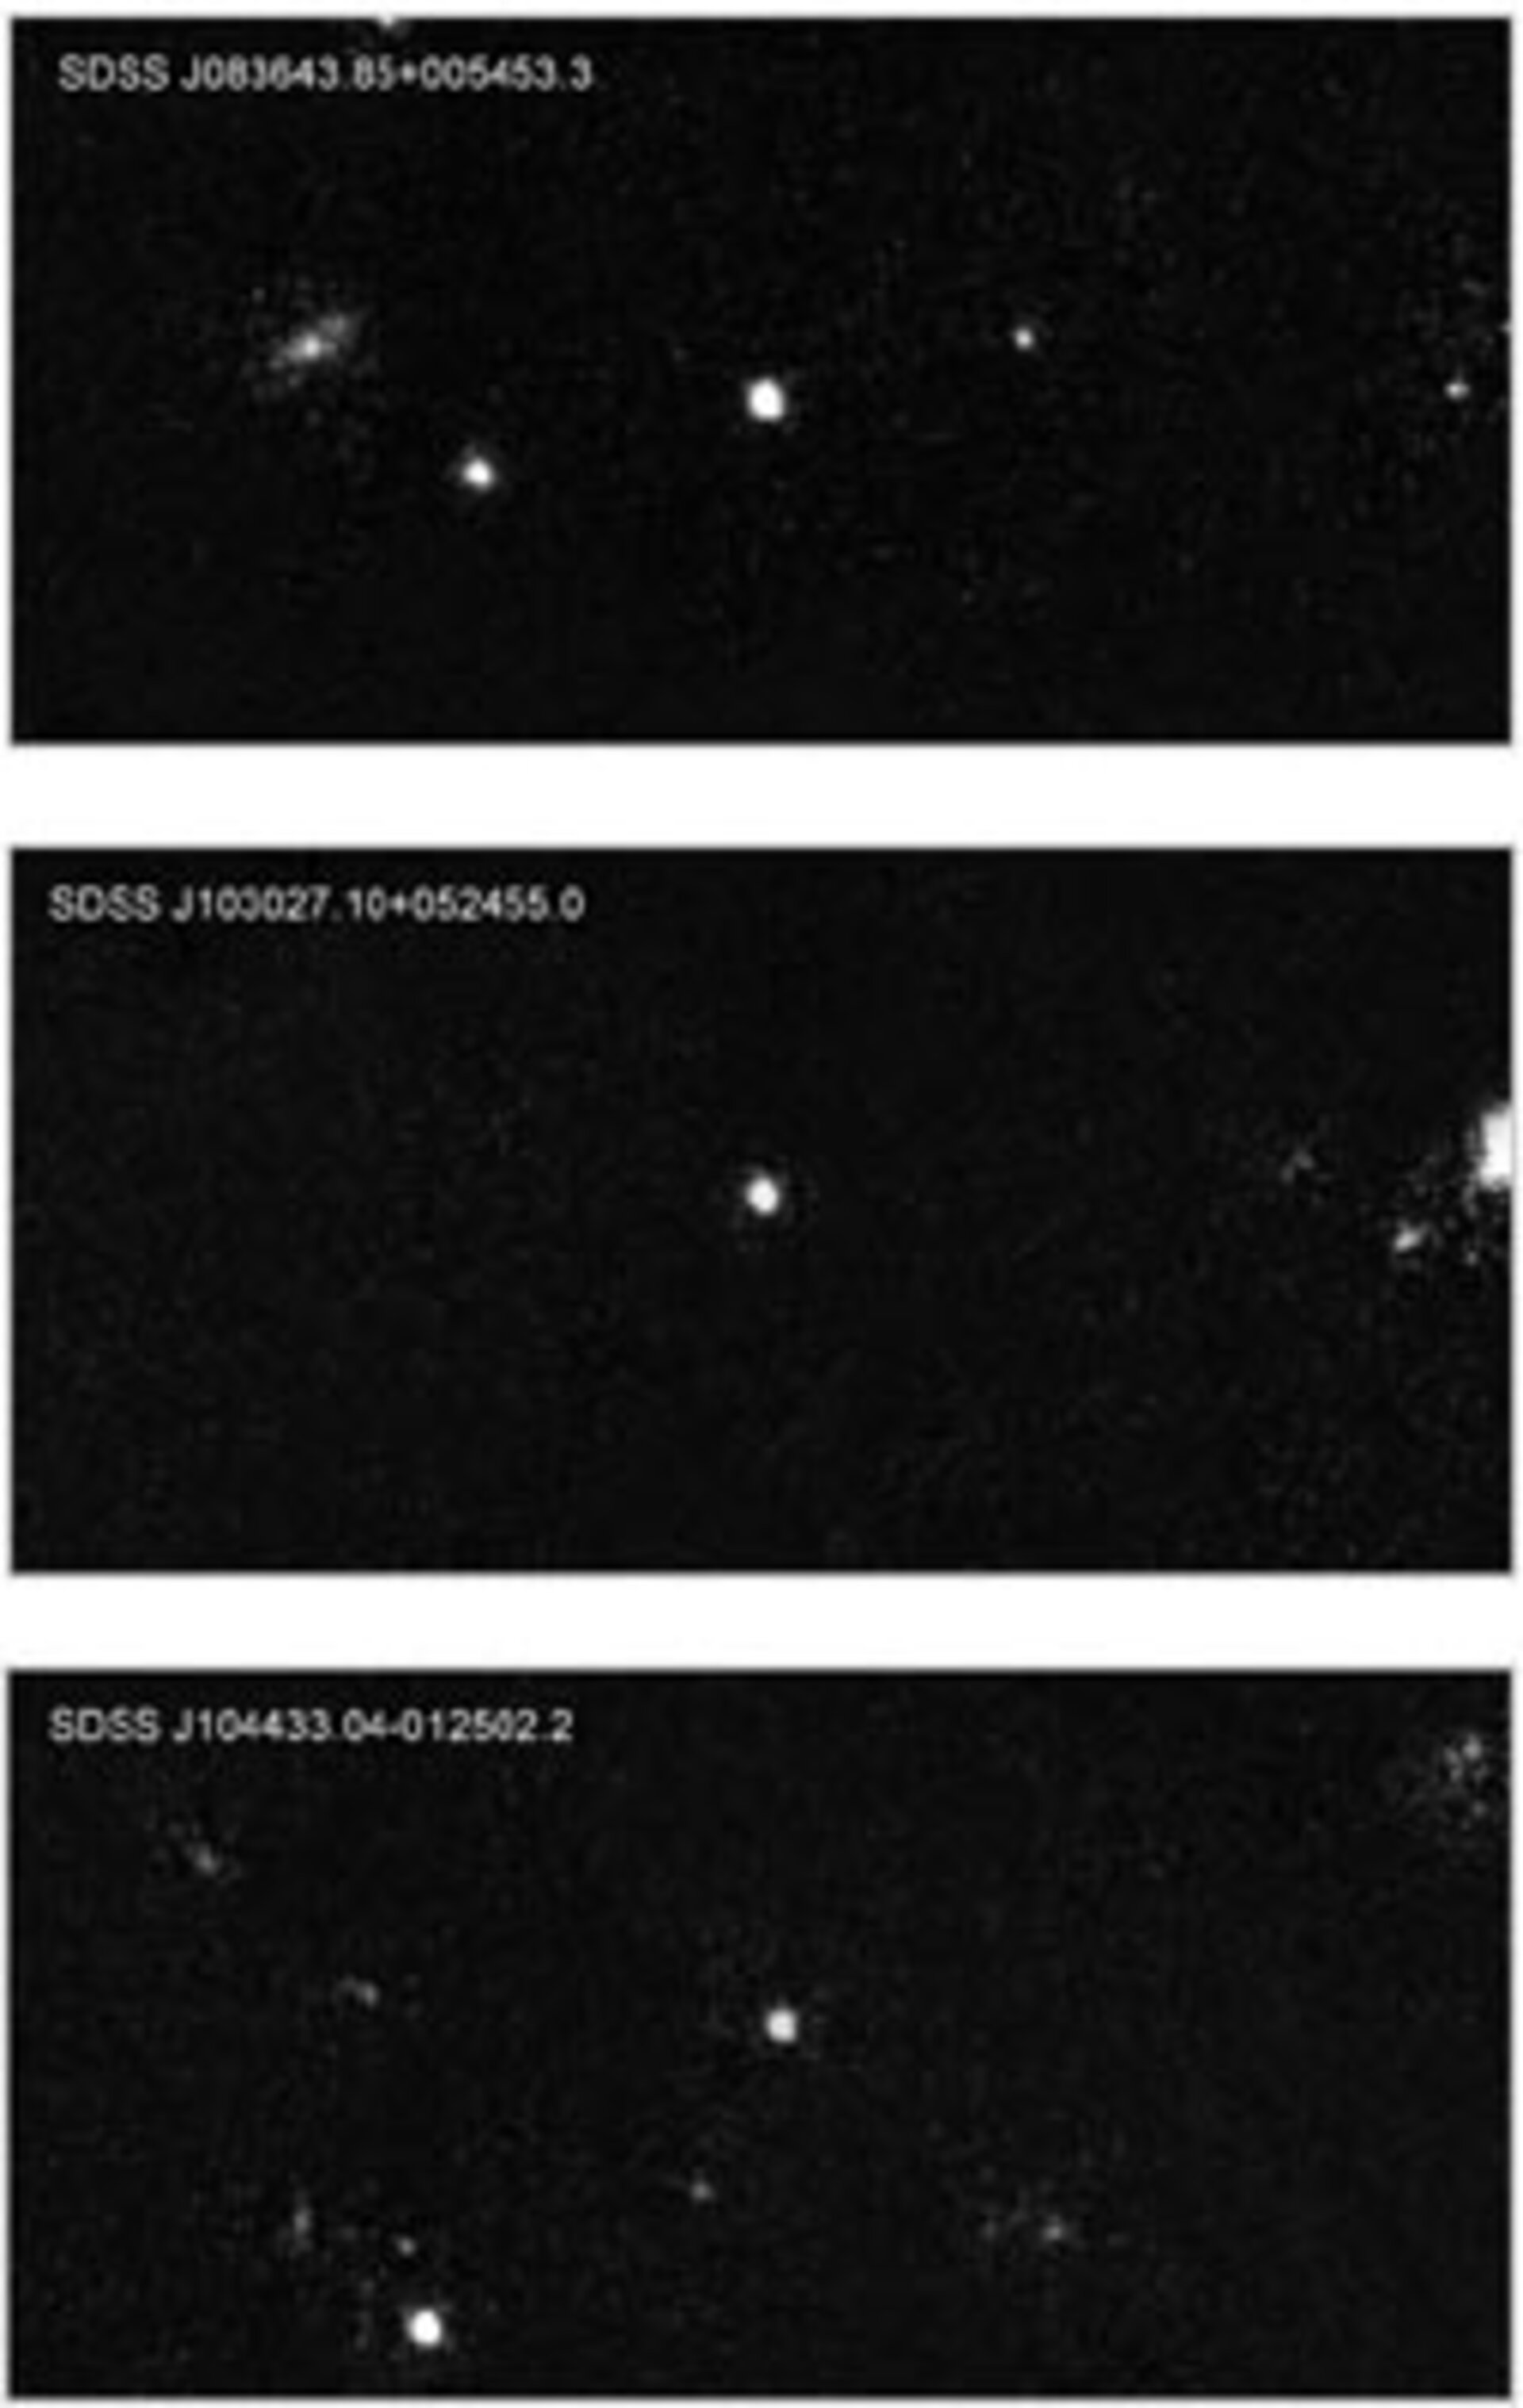 Remote quasars showing large amounts of iron